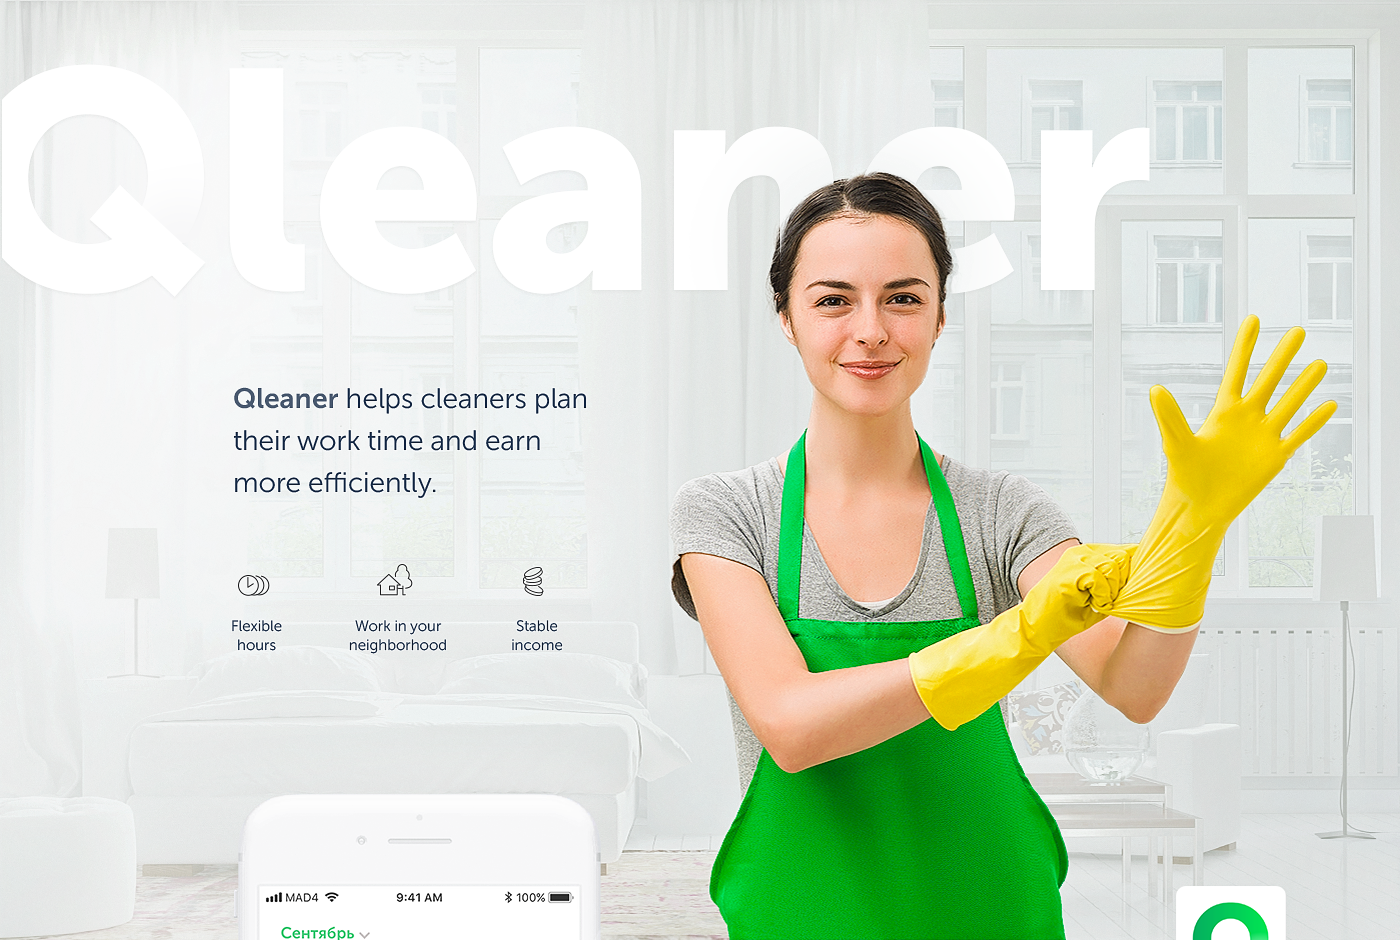 Cleaning plan. For clean компания. Clean job певица. Planar Cleansing. Clean Plan.